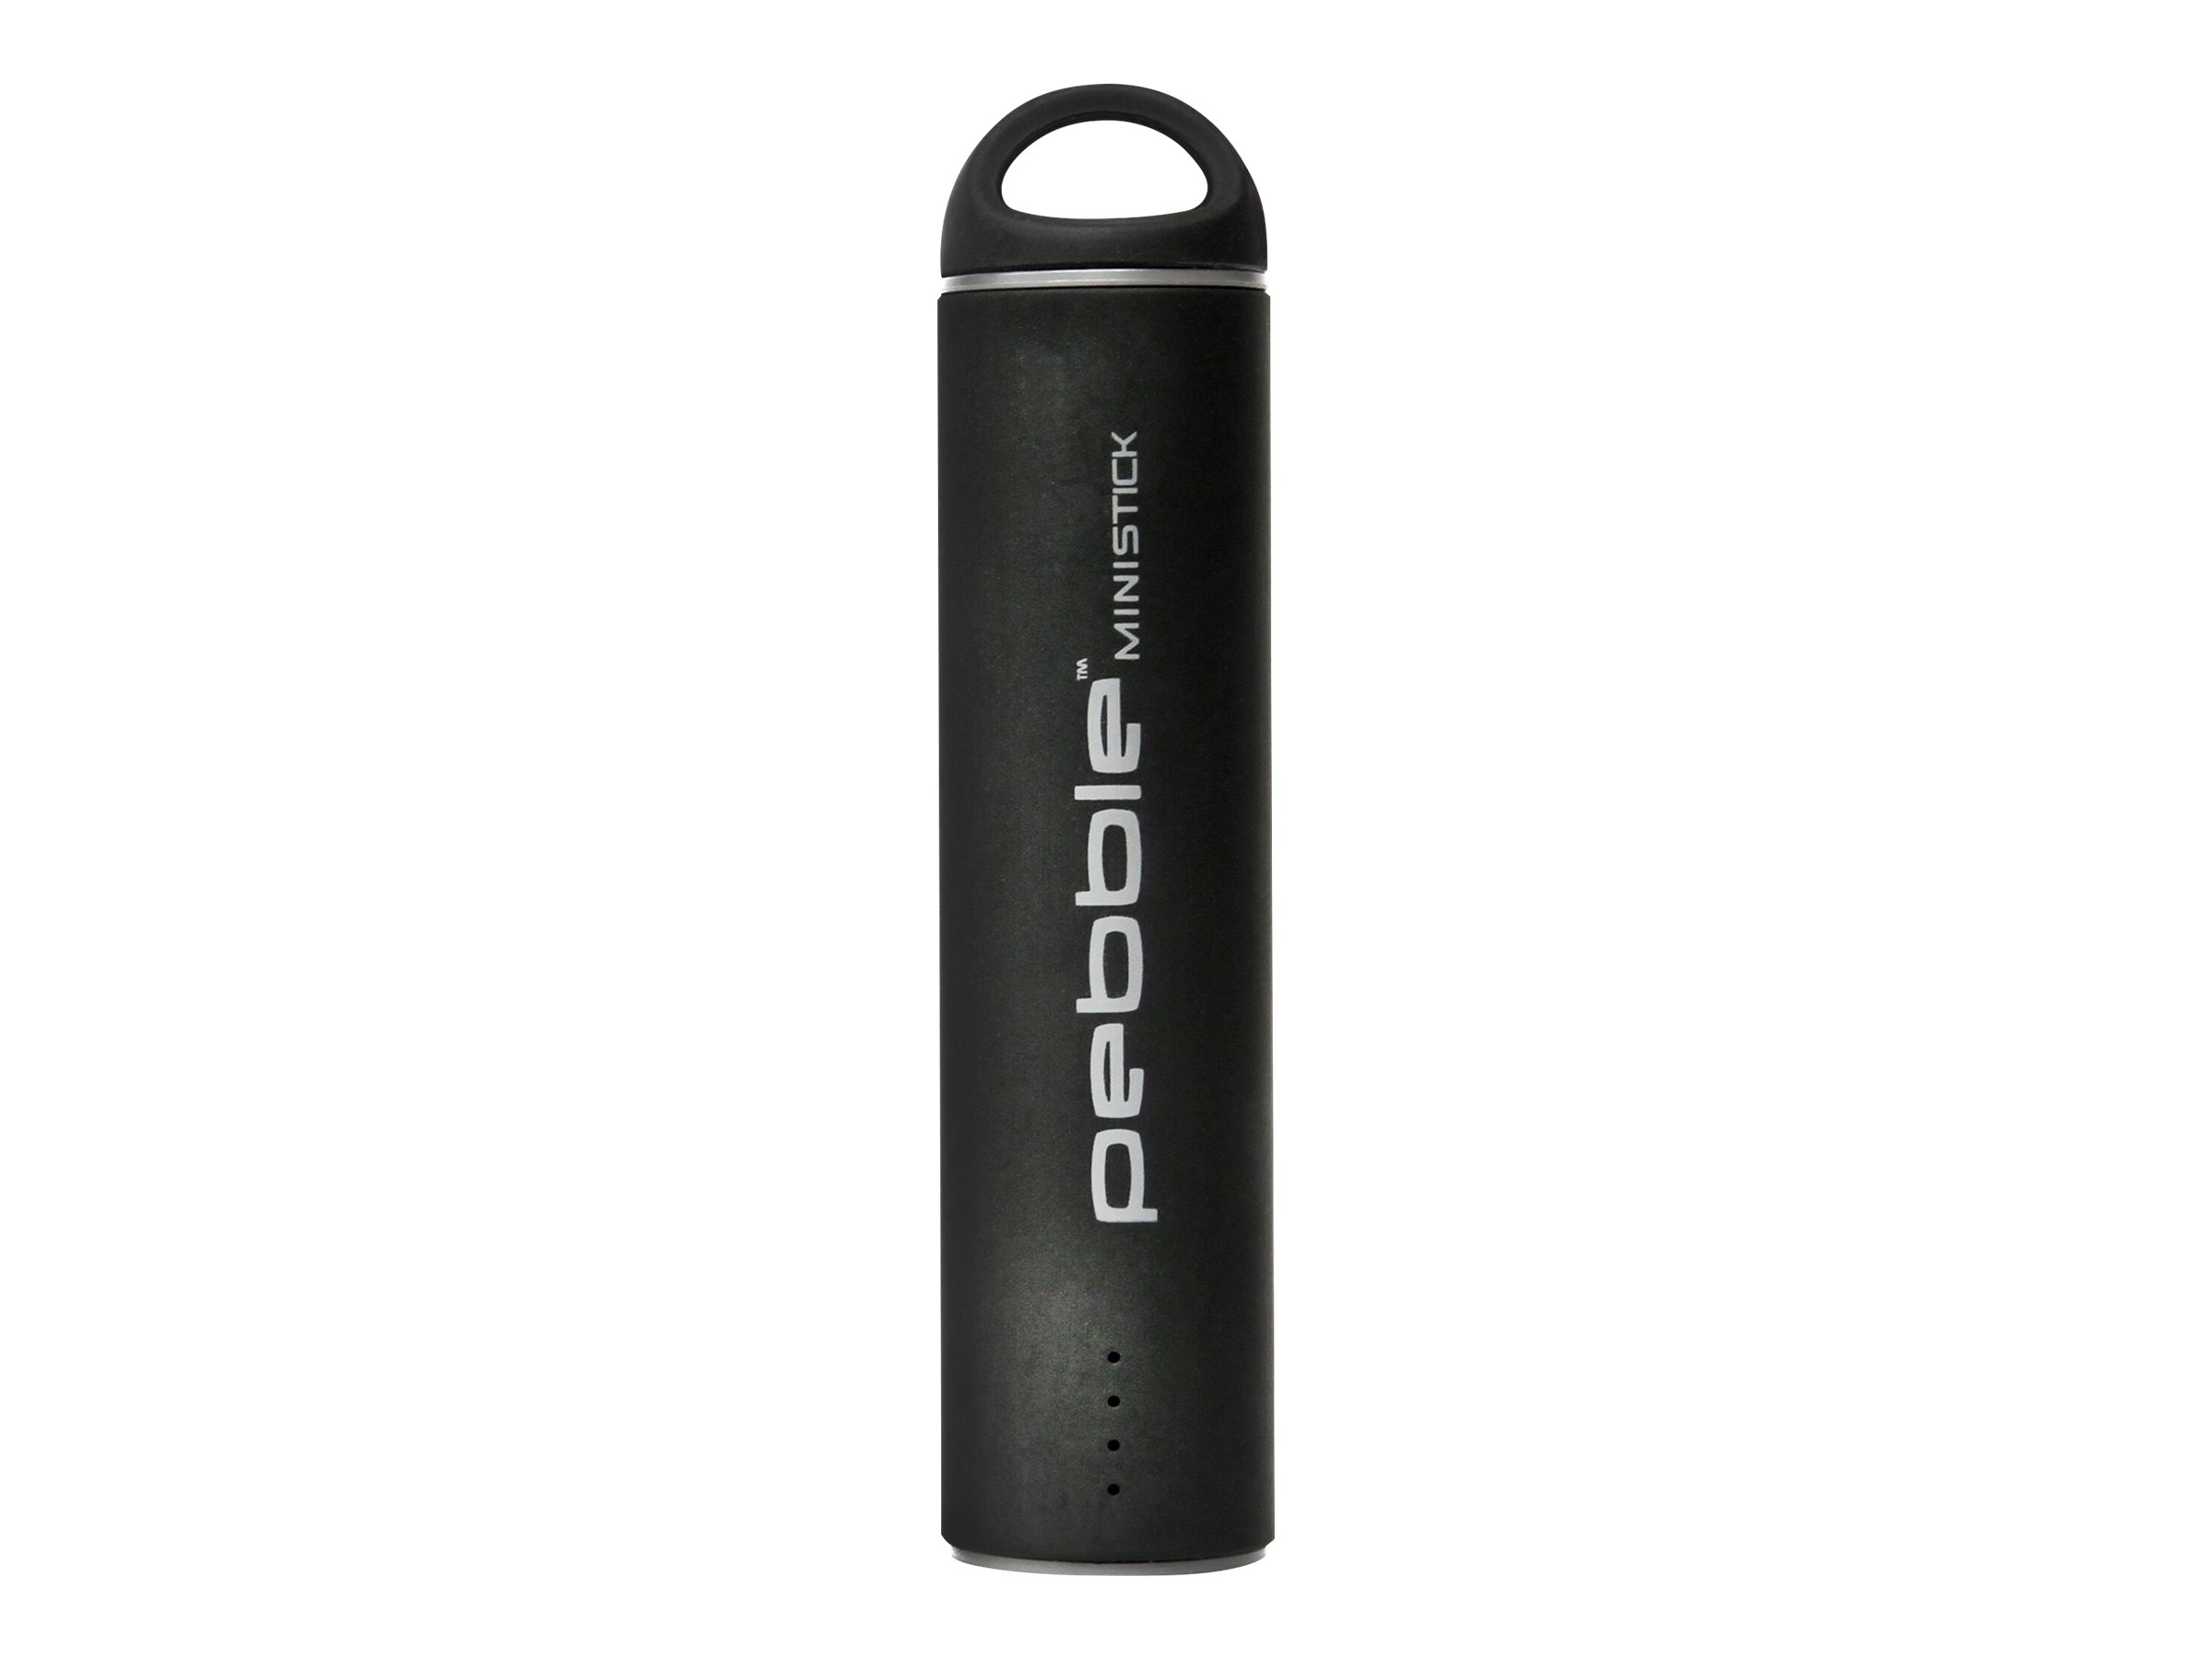 Veho Pebble Ministick 2,200mAh Emergency Portable Rechargeable Power Bank Black (VPP-102-BL-2200)